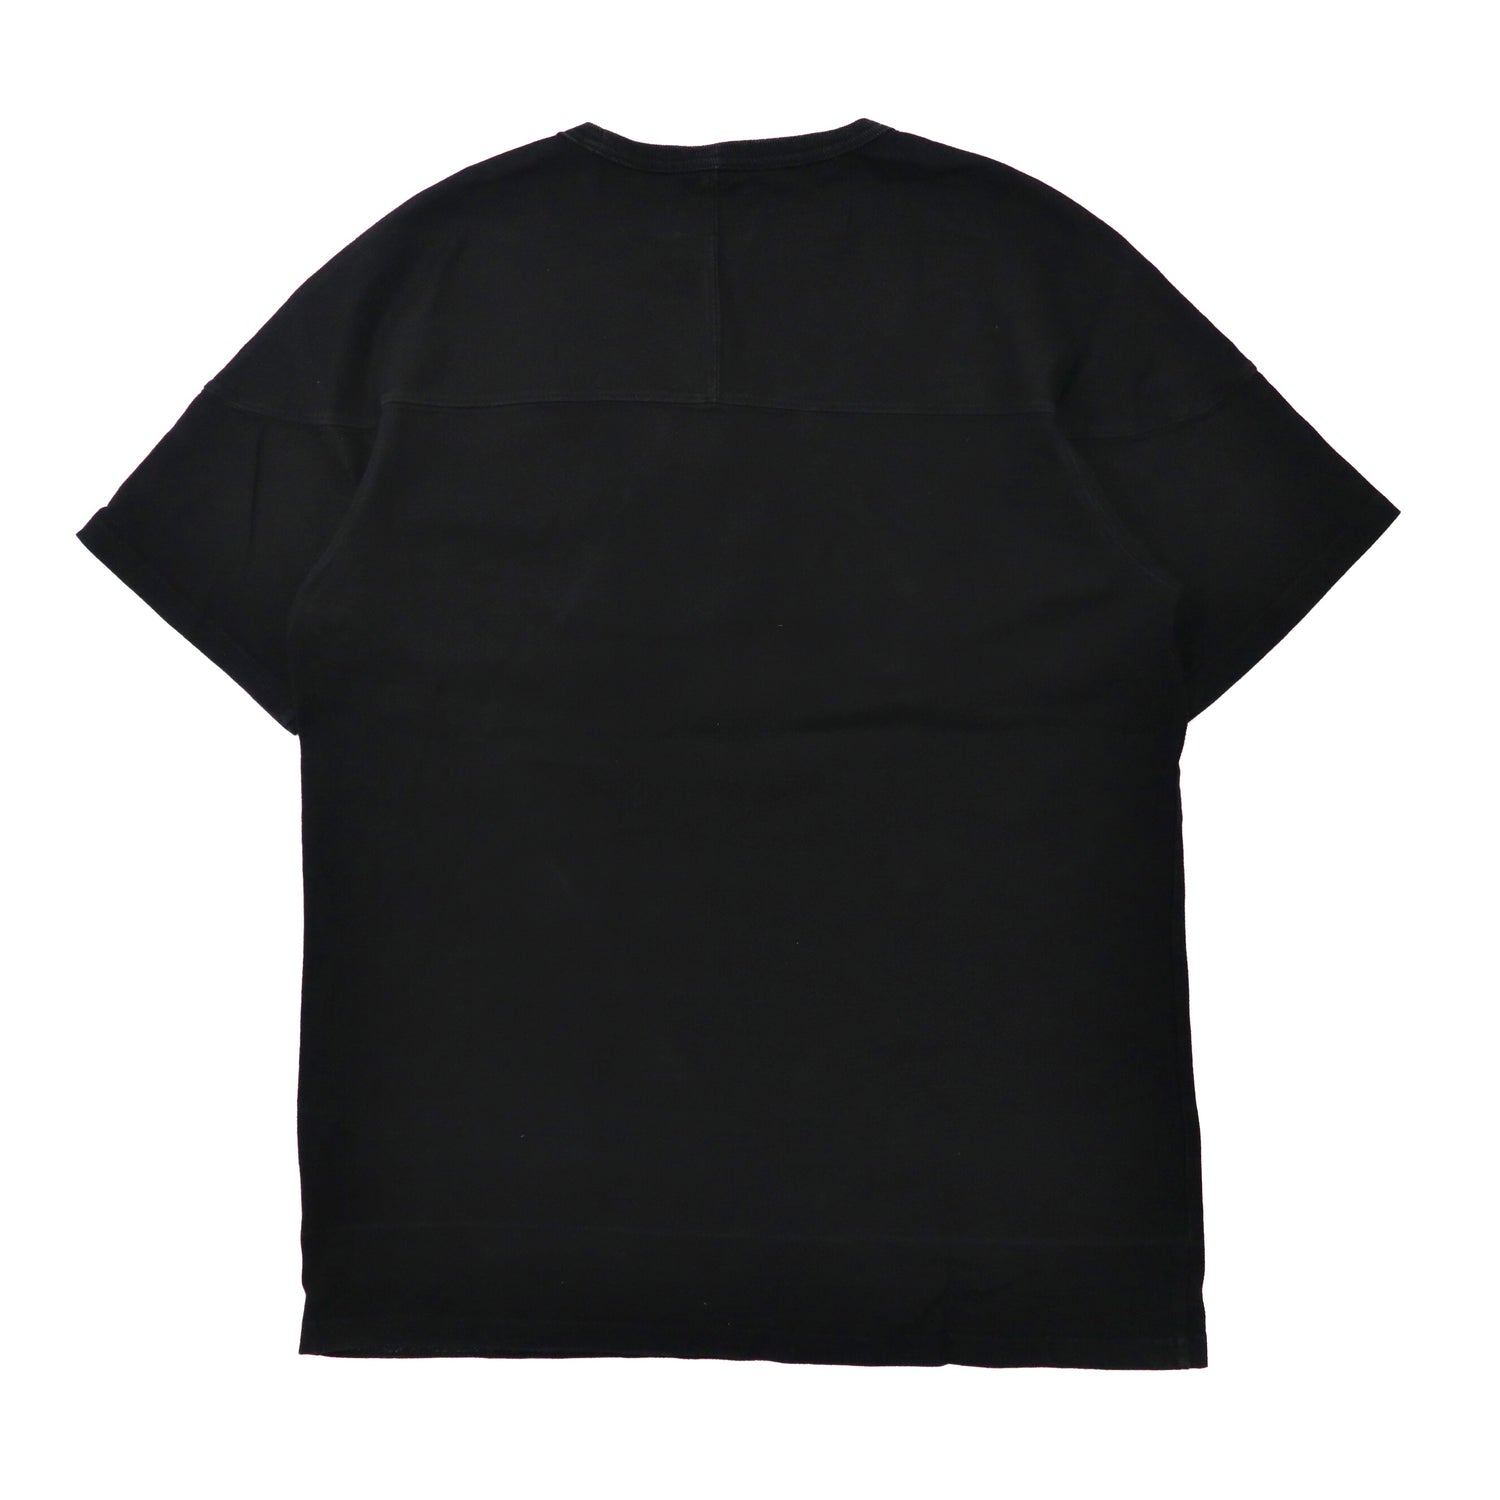 Stussy Big Size Logo Tee T-Shirt XL Black Cotton Heavy Weight 